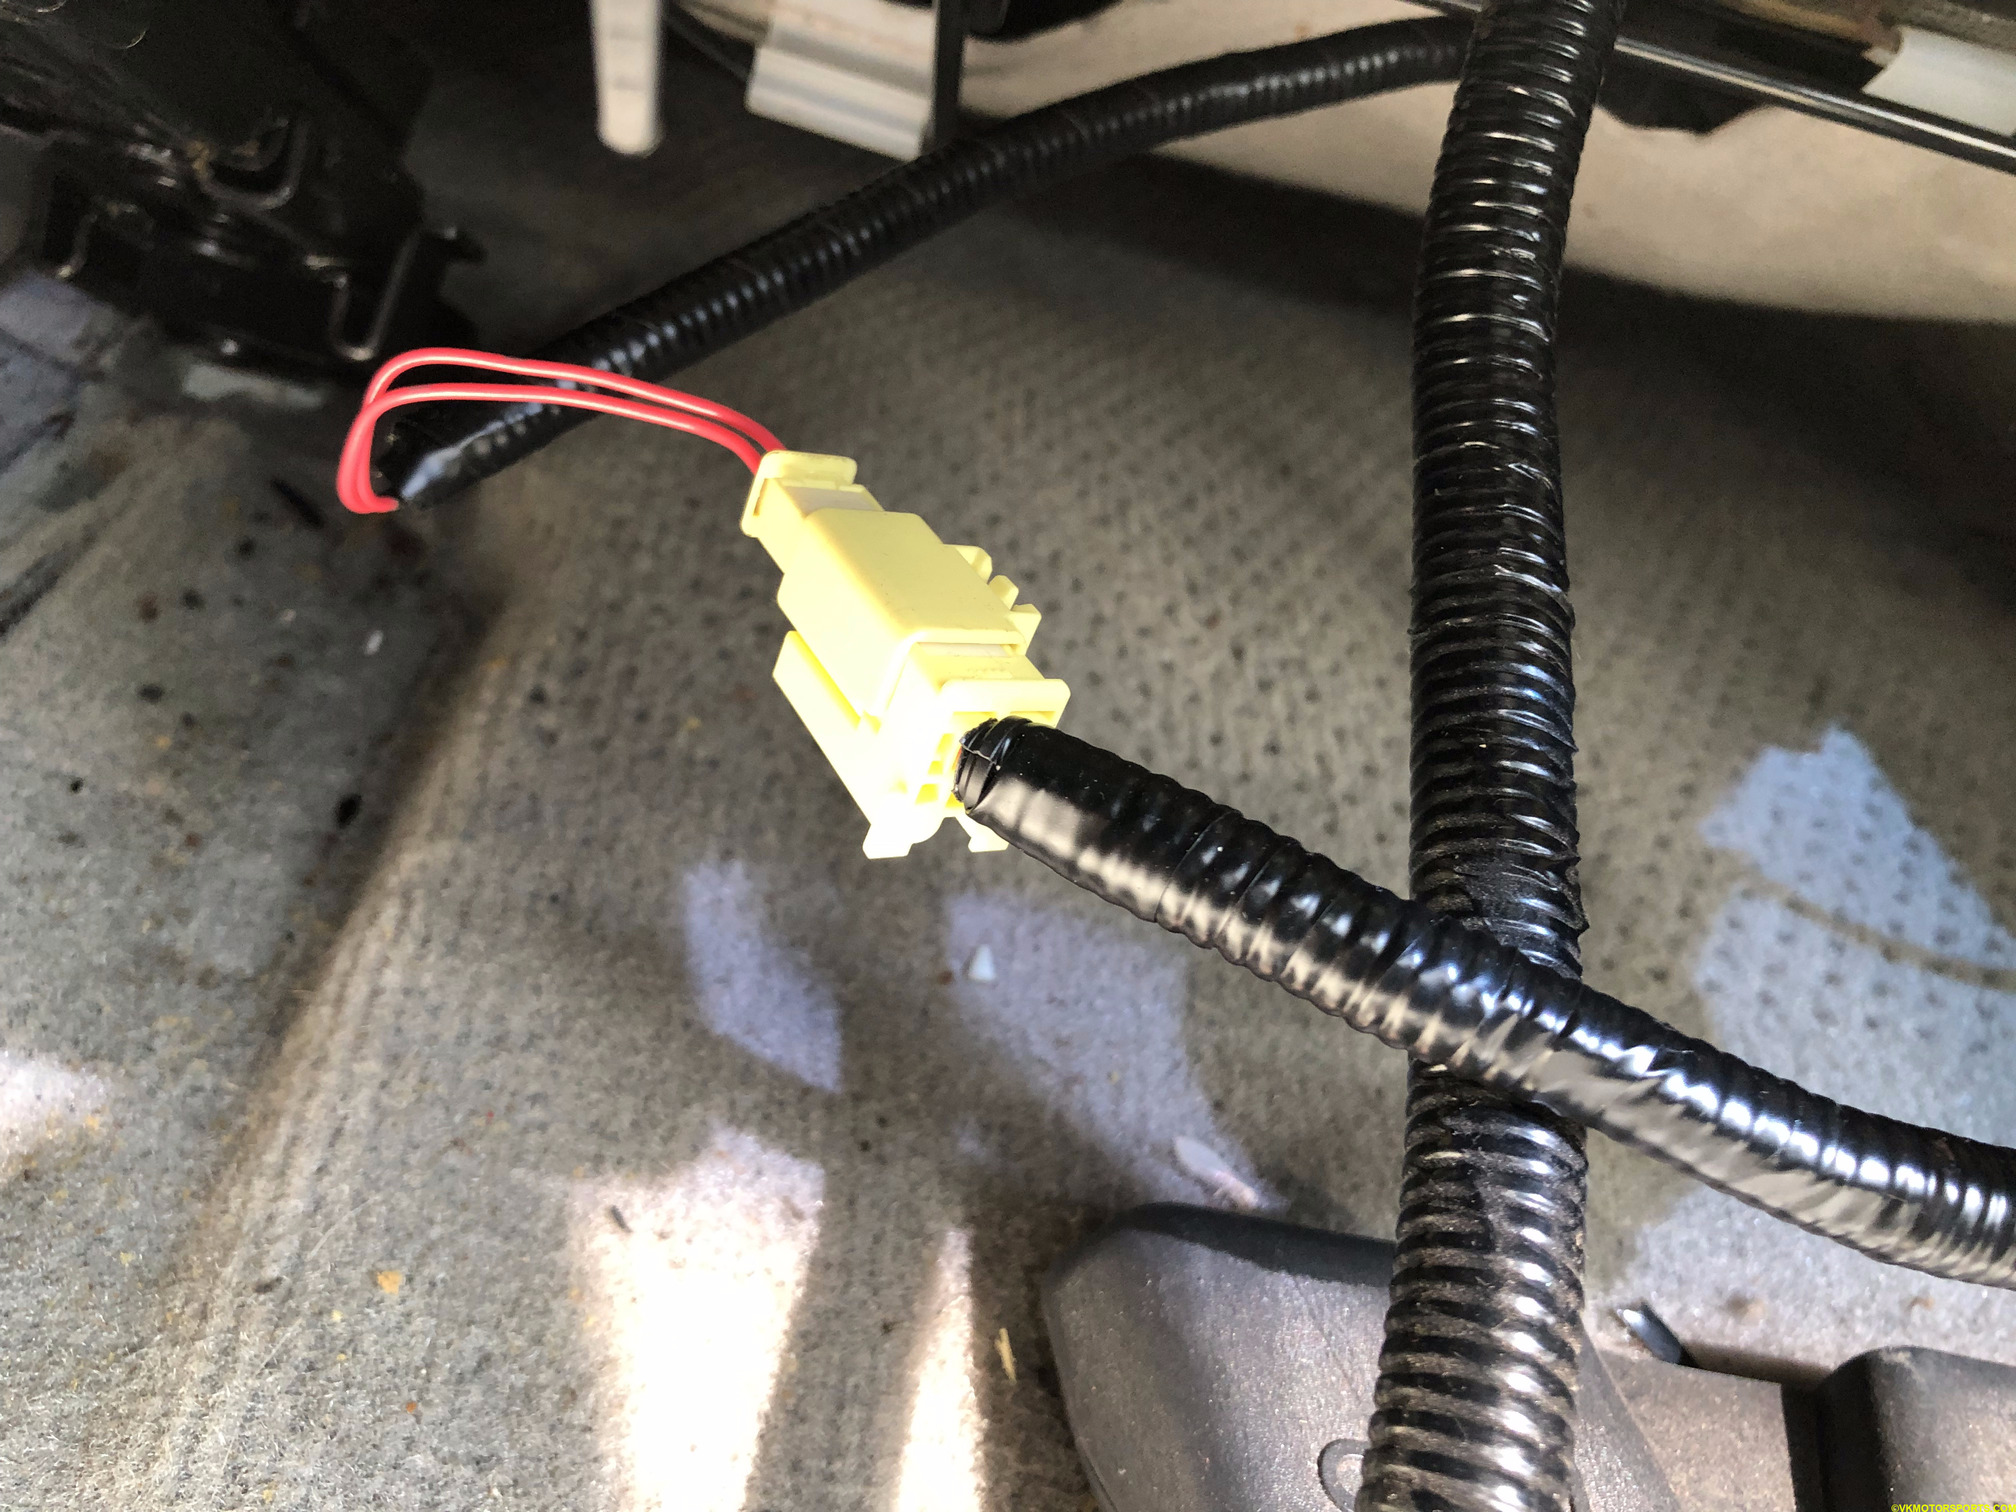 Figure 3f. Yellow airbag sensor connector